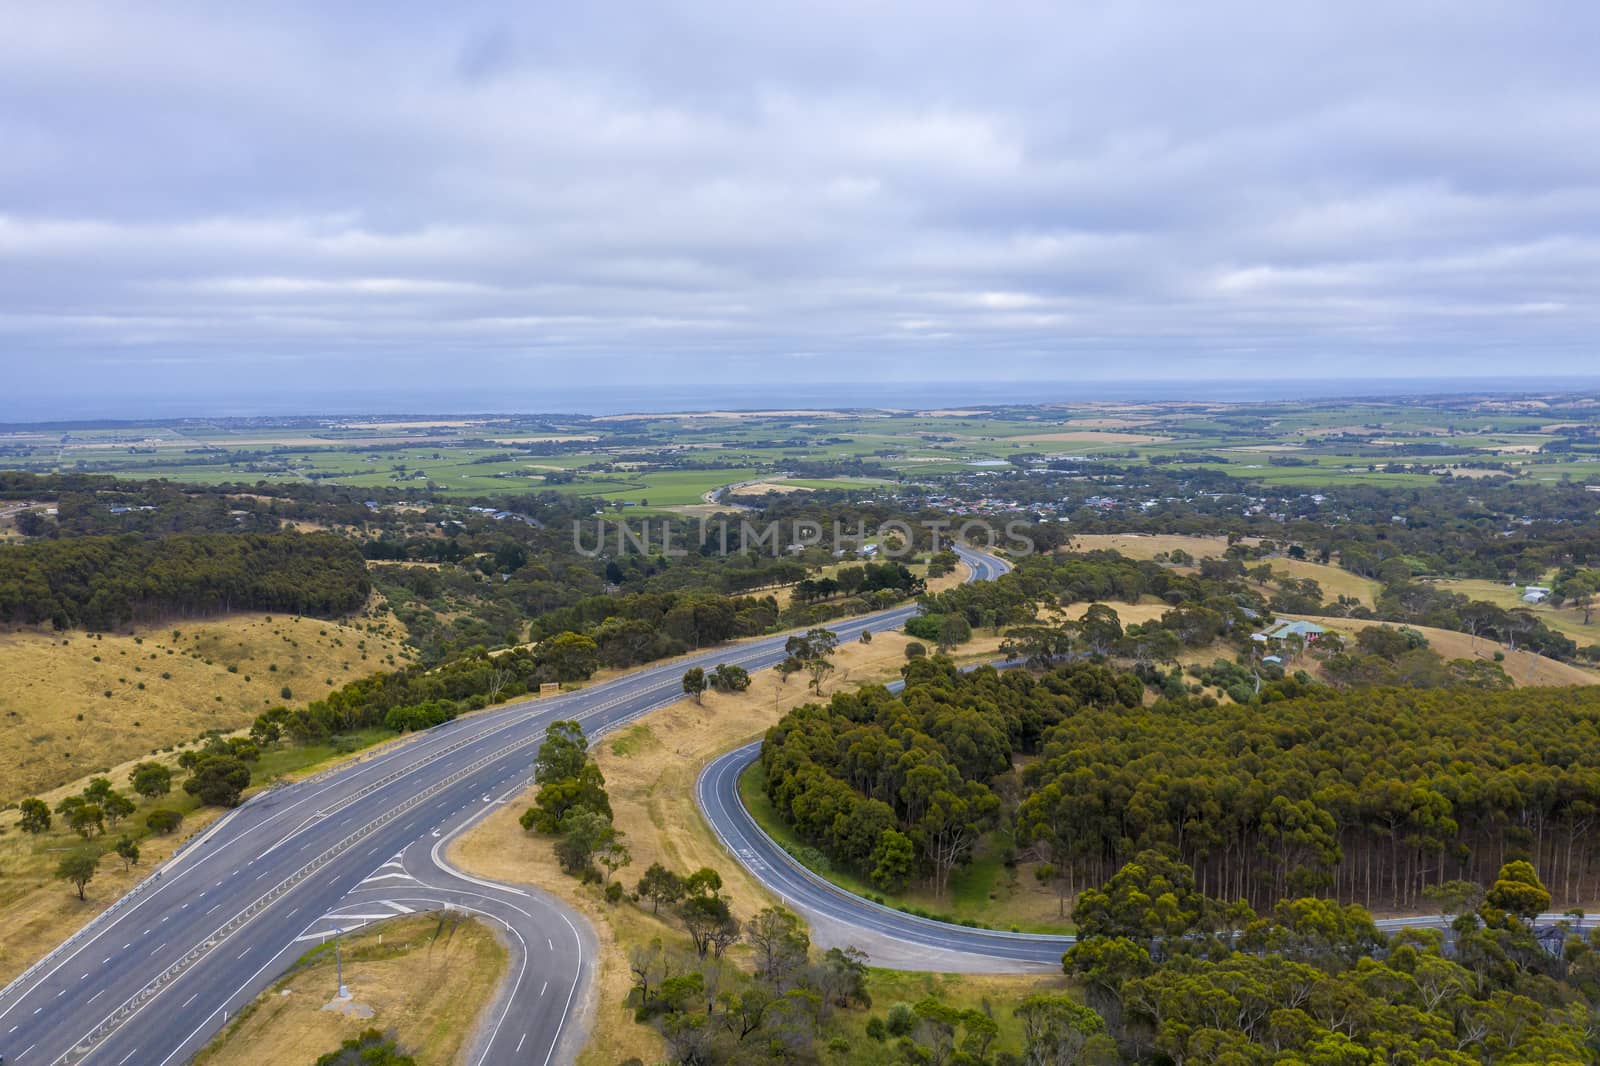 Aerial view of an arterial road running through green fields in regional Australia